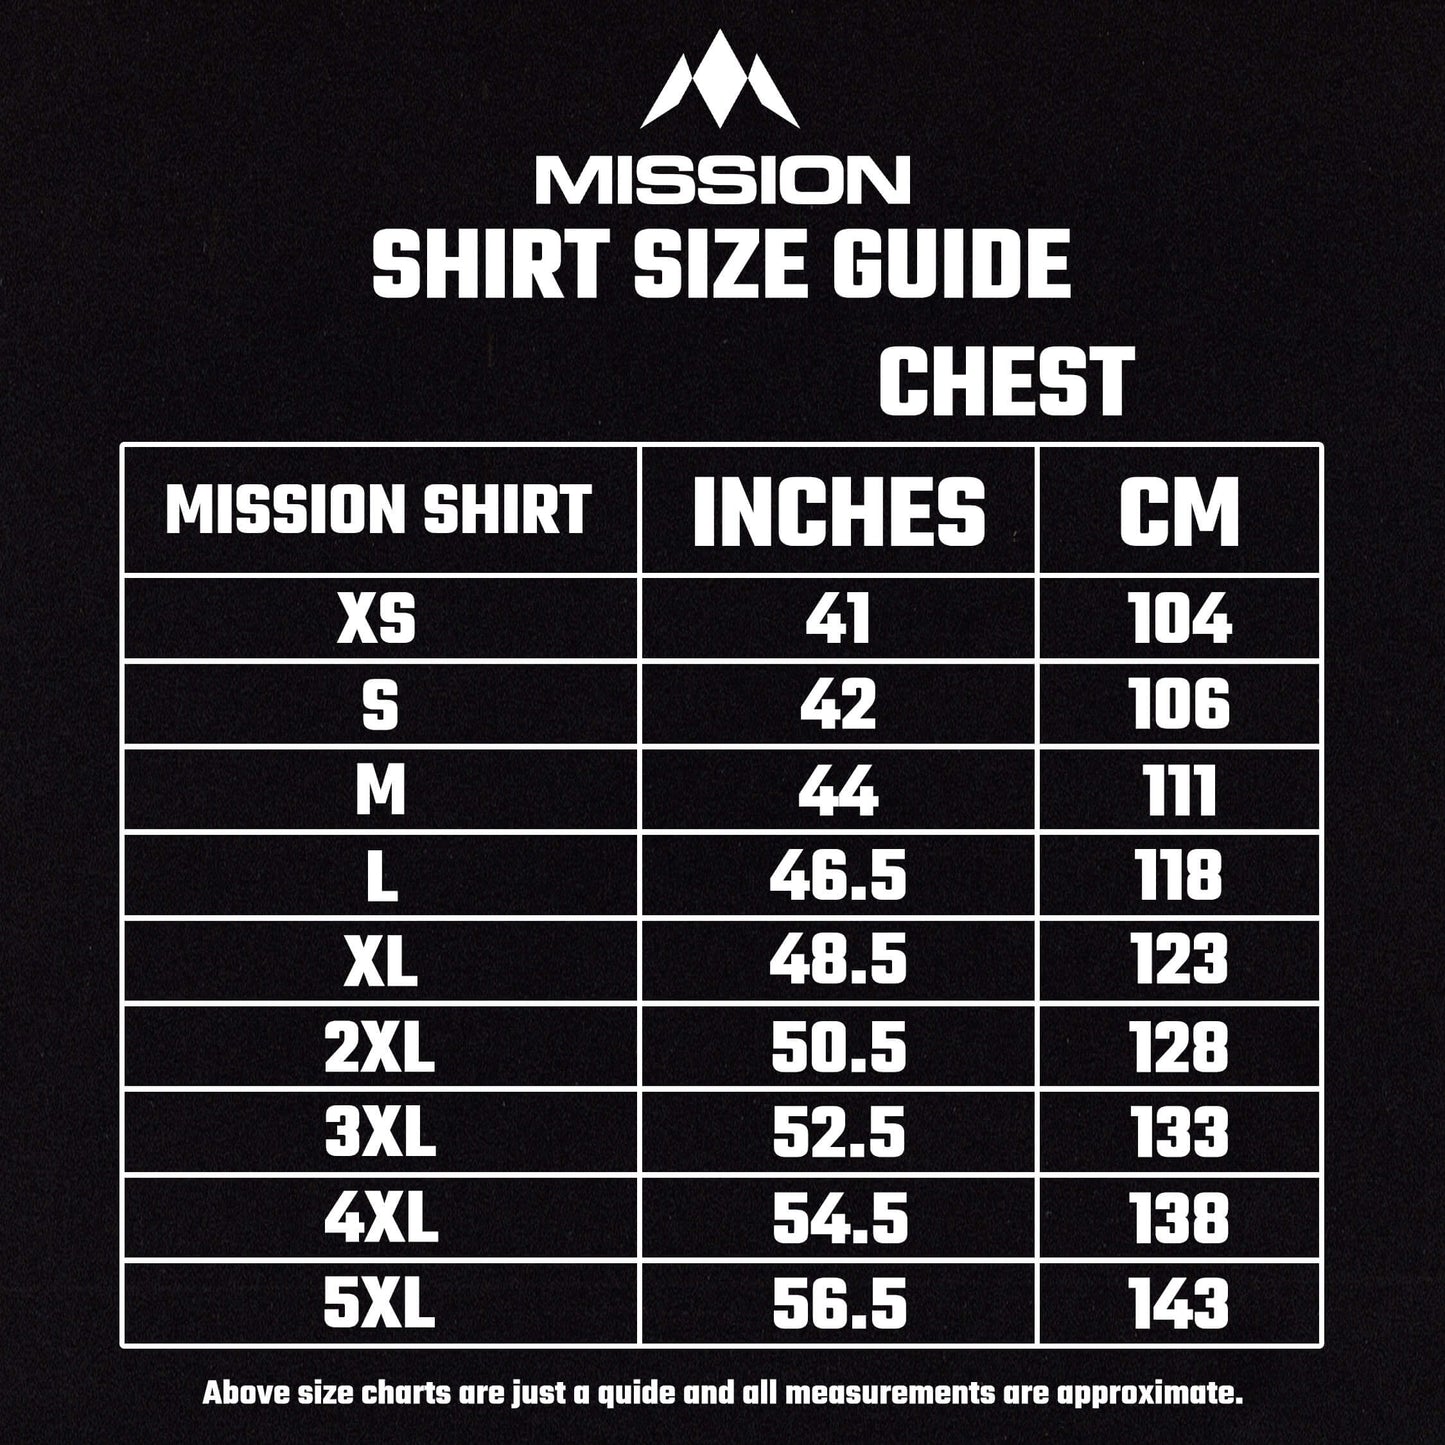 Mission Player Dart Shirt - Josh Rock - Rocky